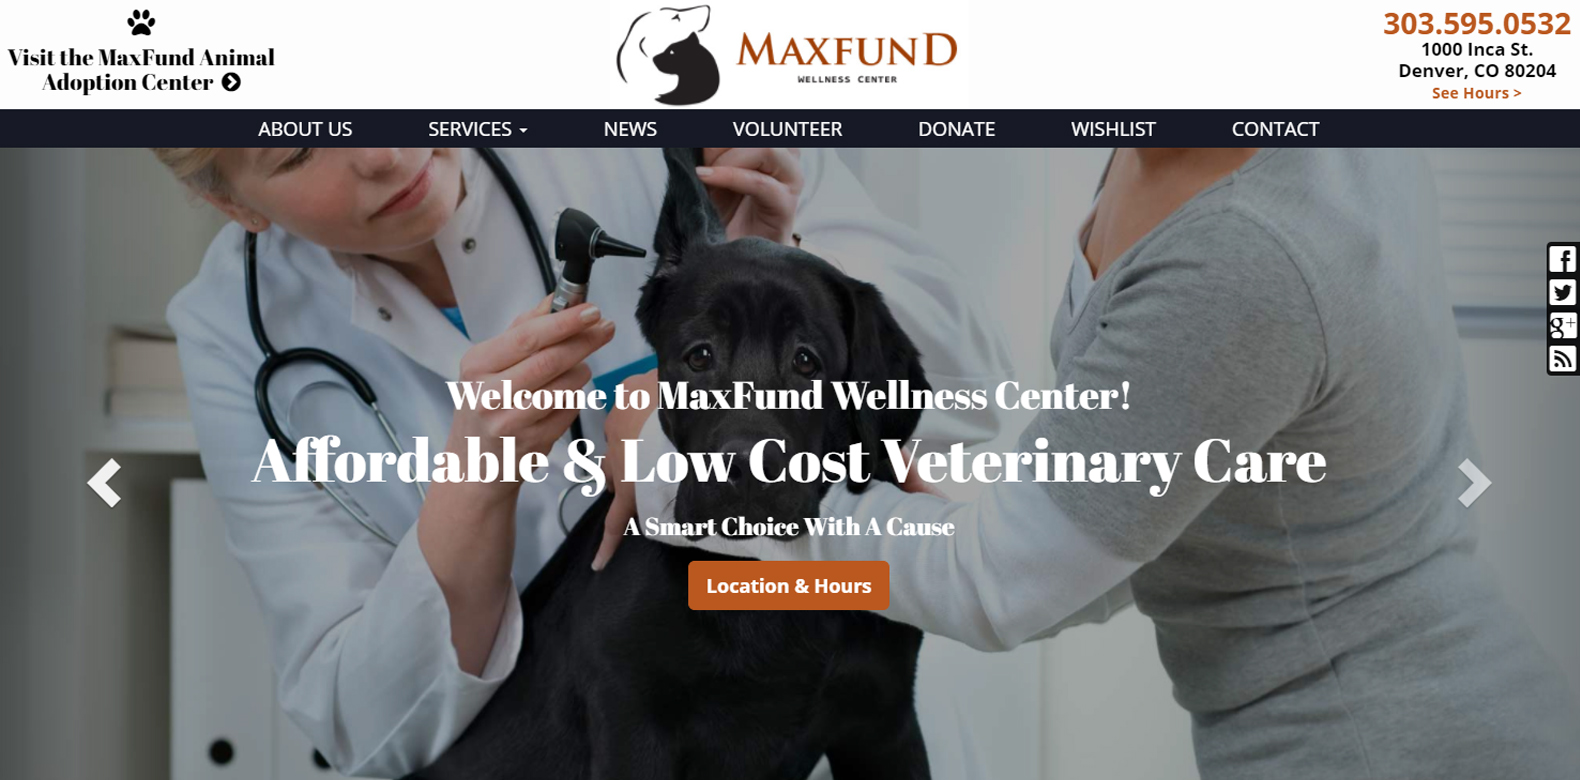 
New Website Launch: Maxfund Wellness Center